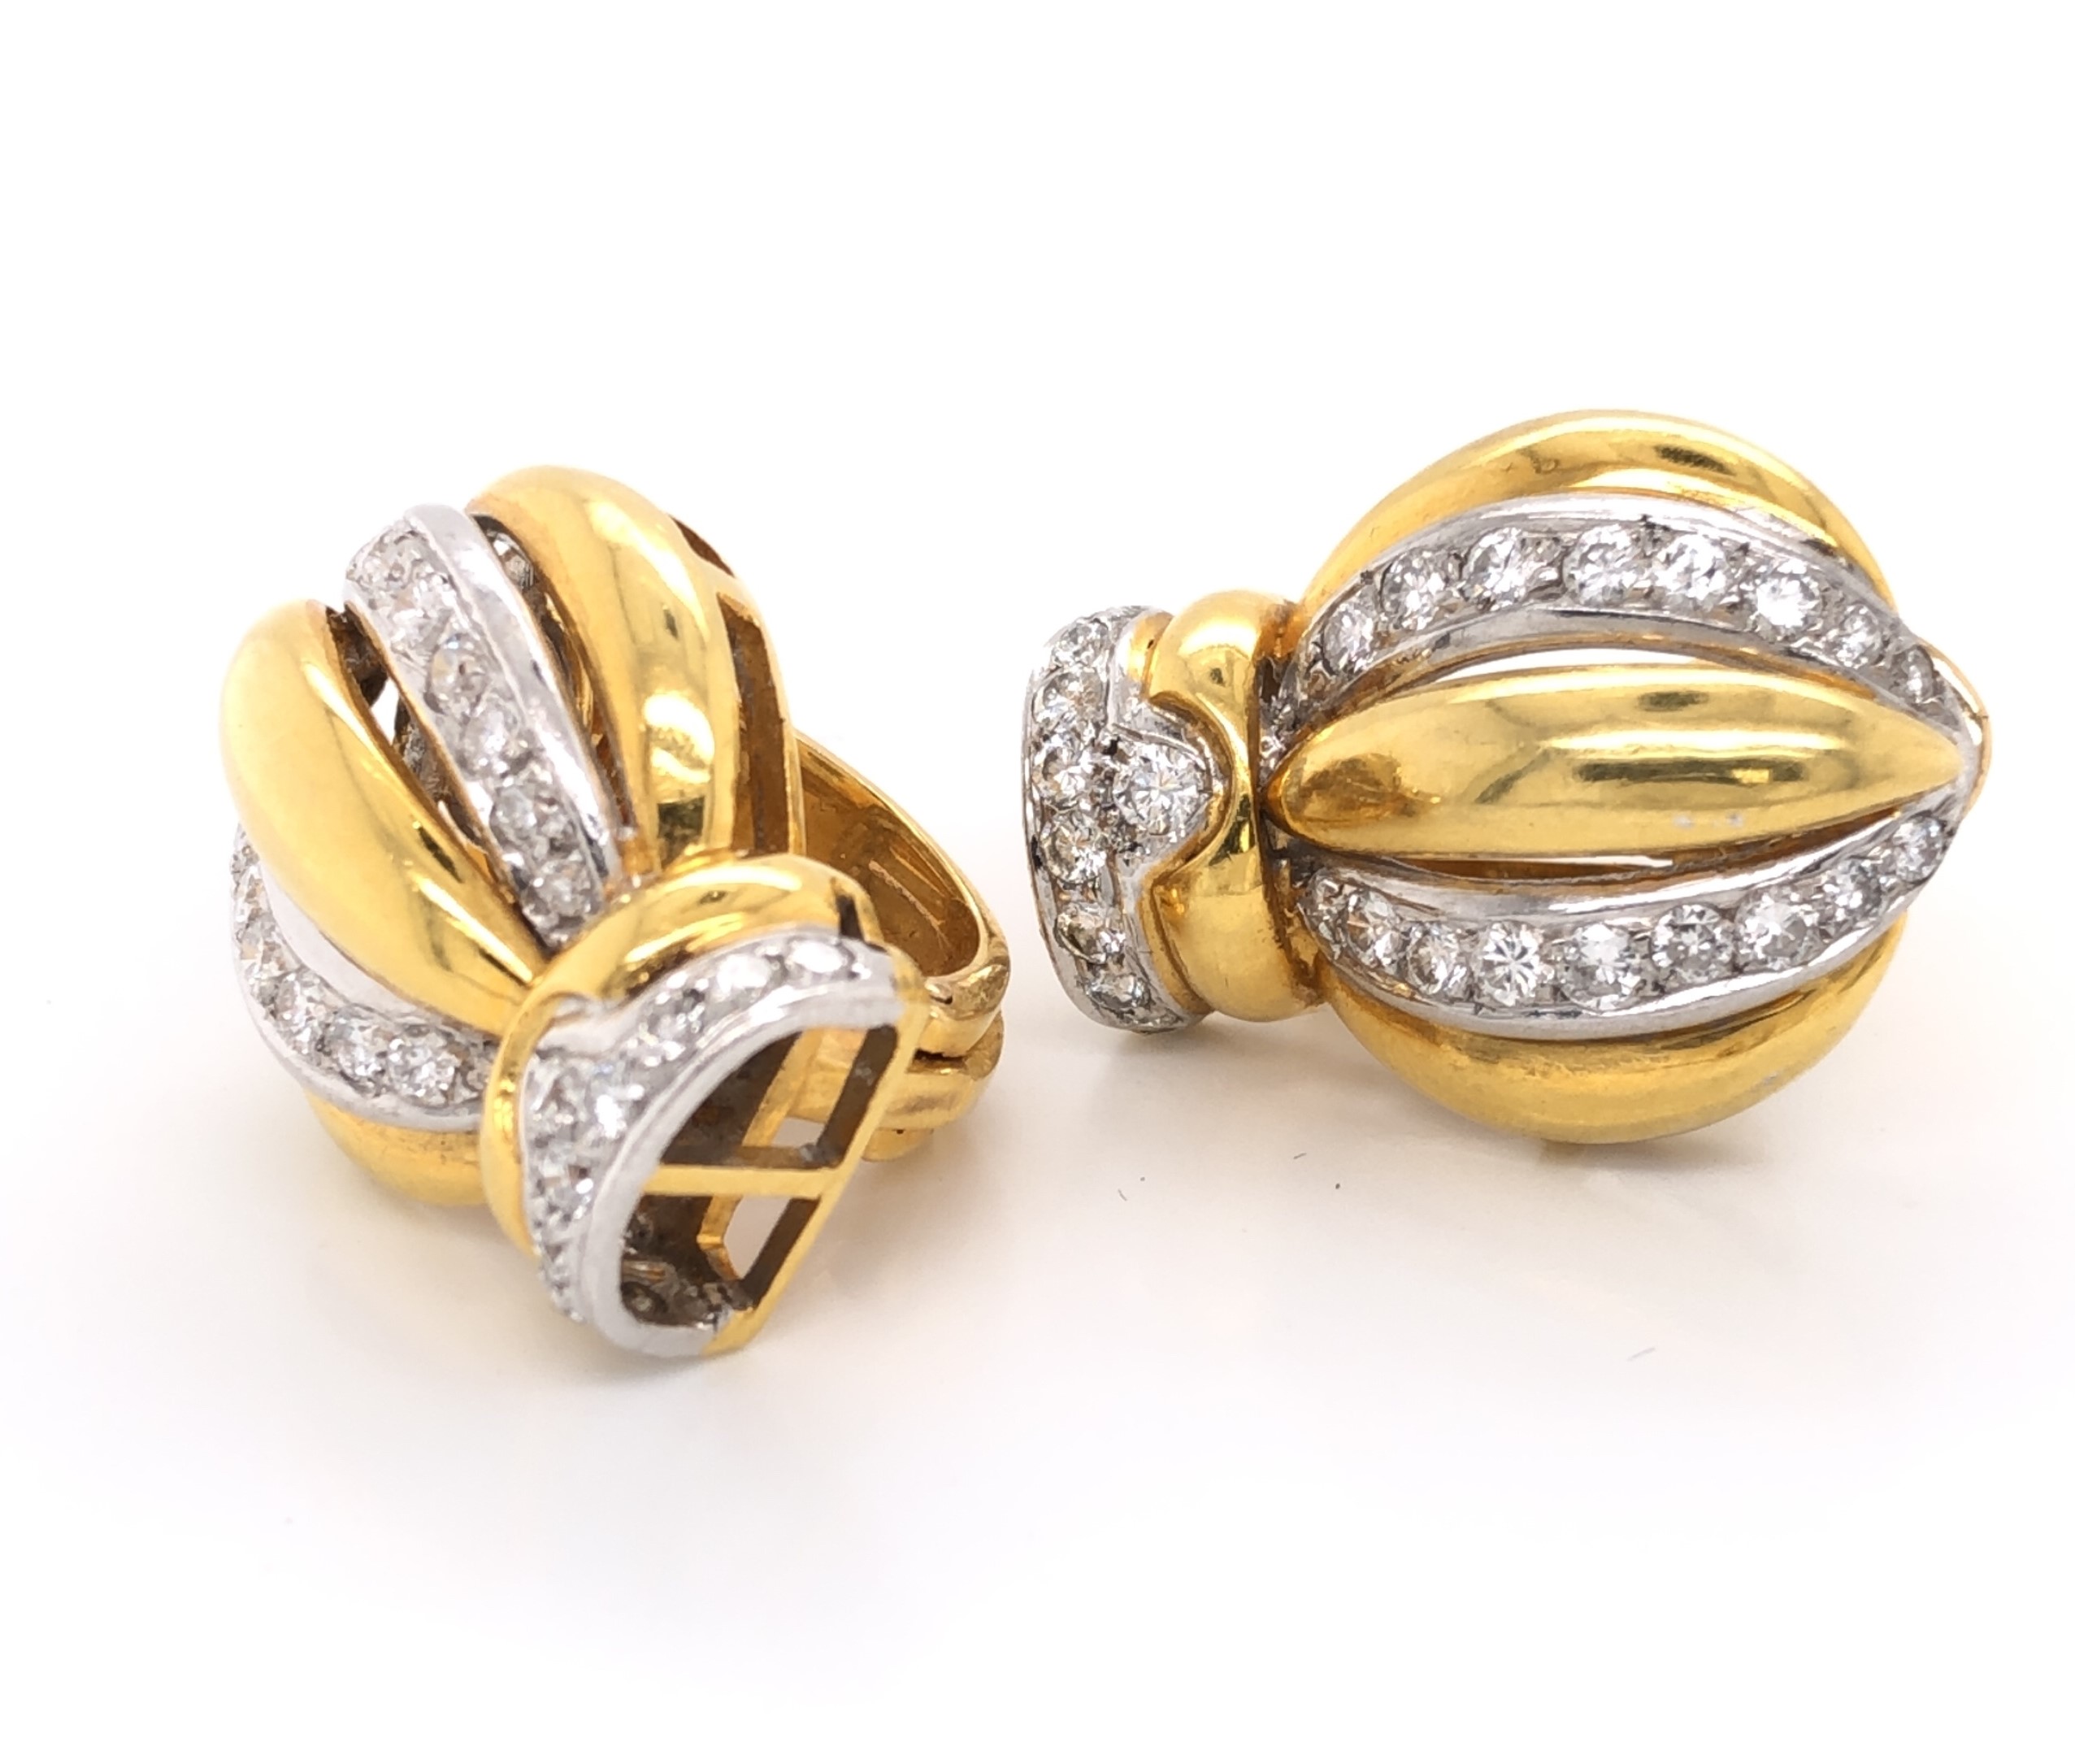 Gold & Diamond Earrings - Image 2 of 4